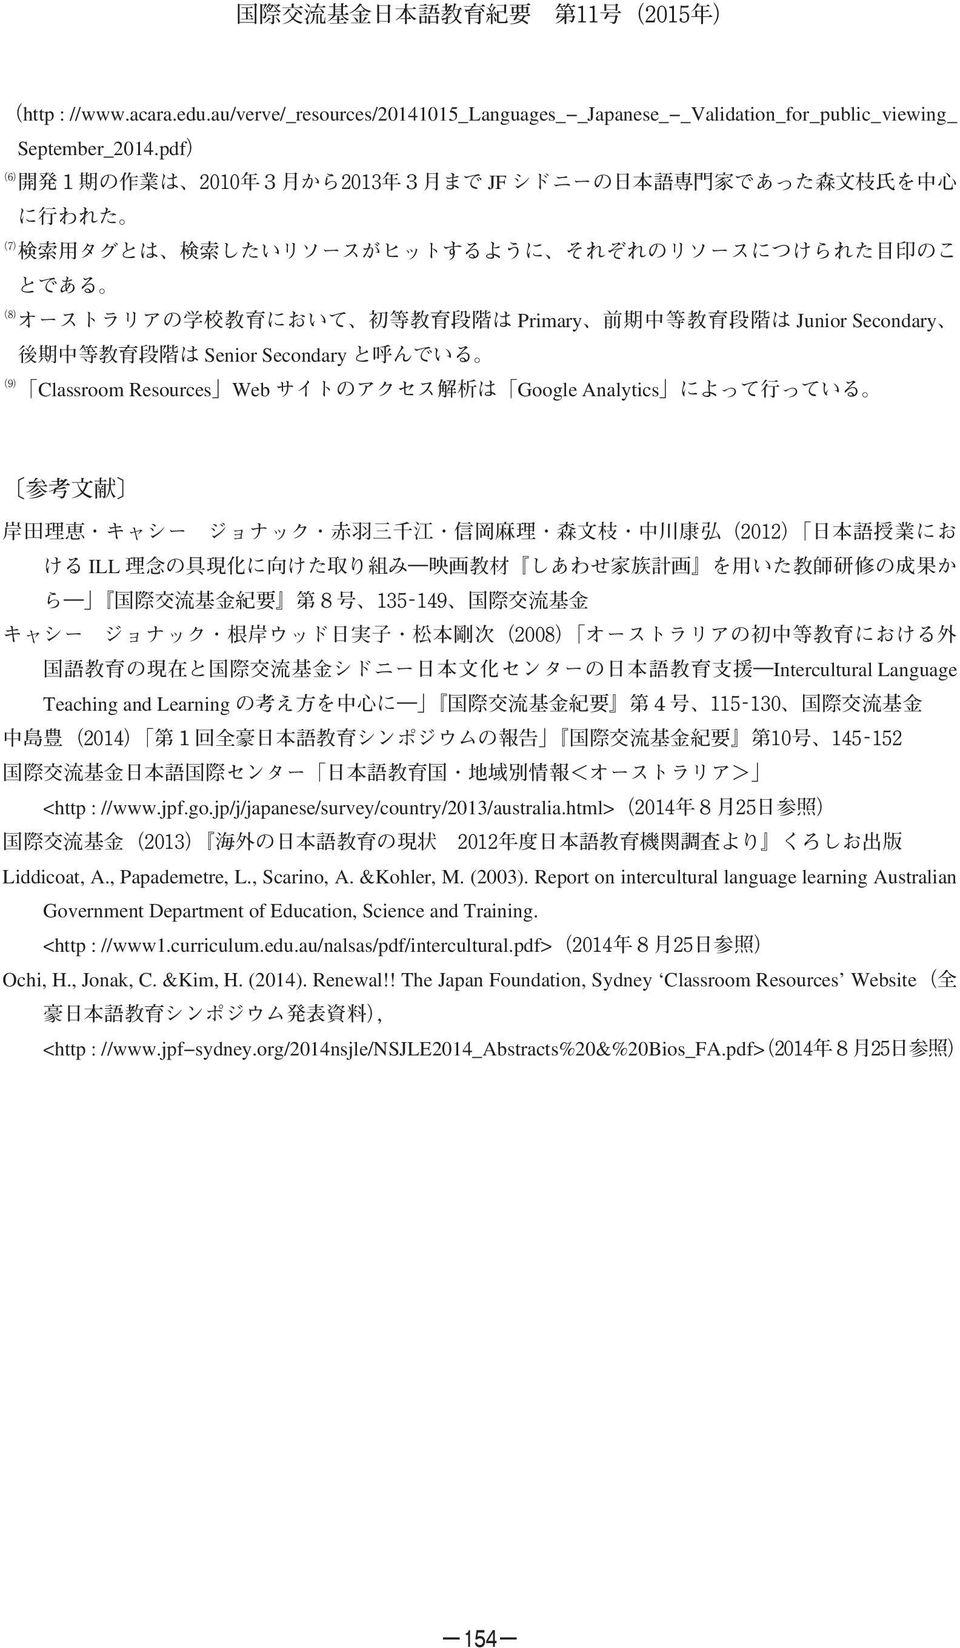 jp/j/japanese/survey/country/2013/australia.html> Liddicoat, A., Papademetre, L., Scarino, A. &Kohler, M. (2003).